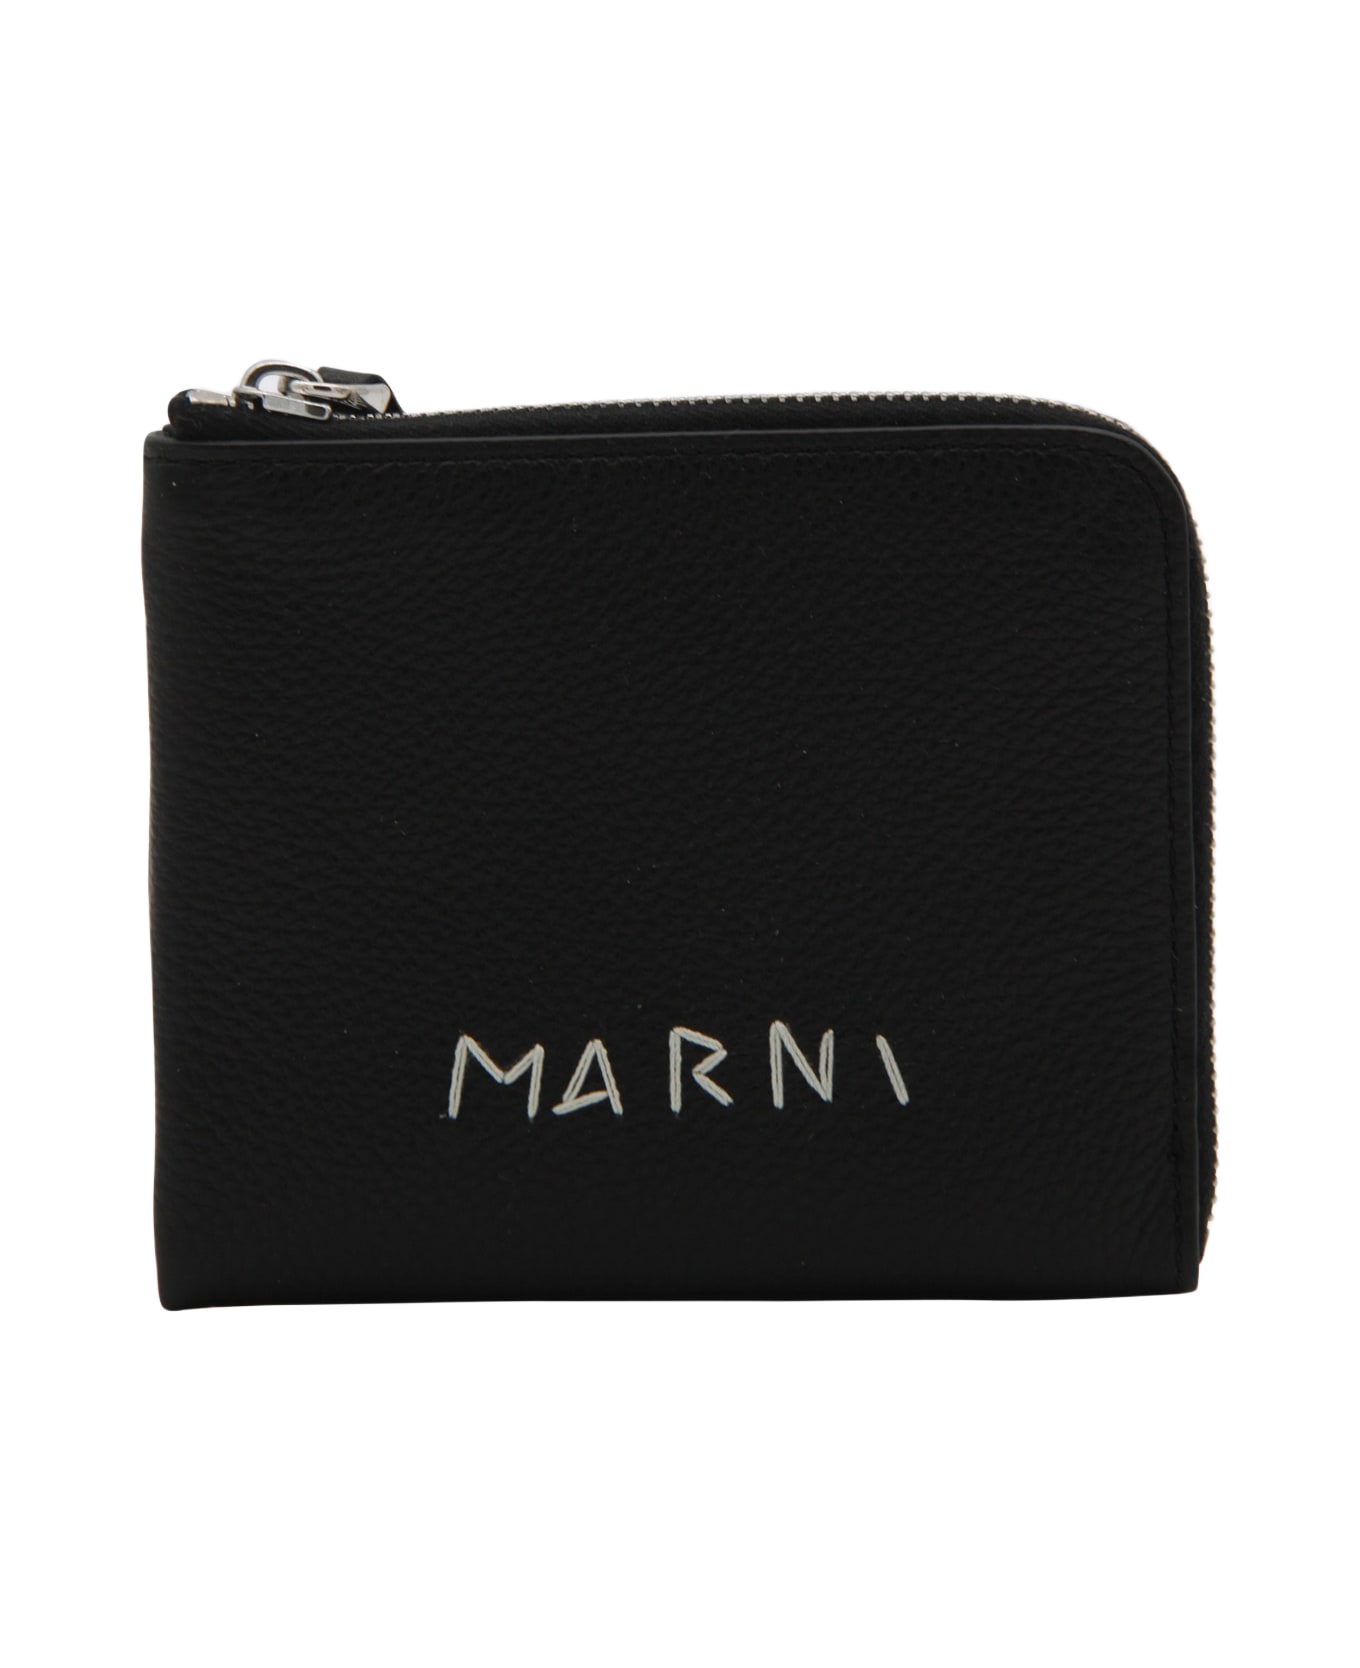 Marni Black Leather Wallet - Black